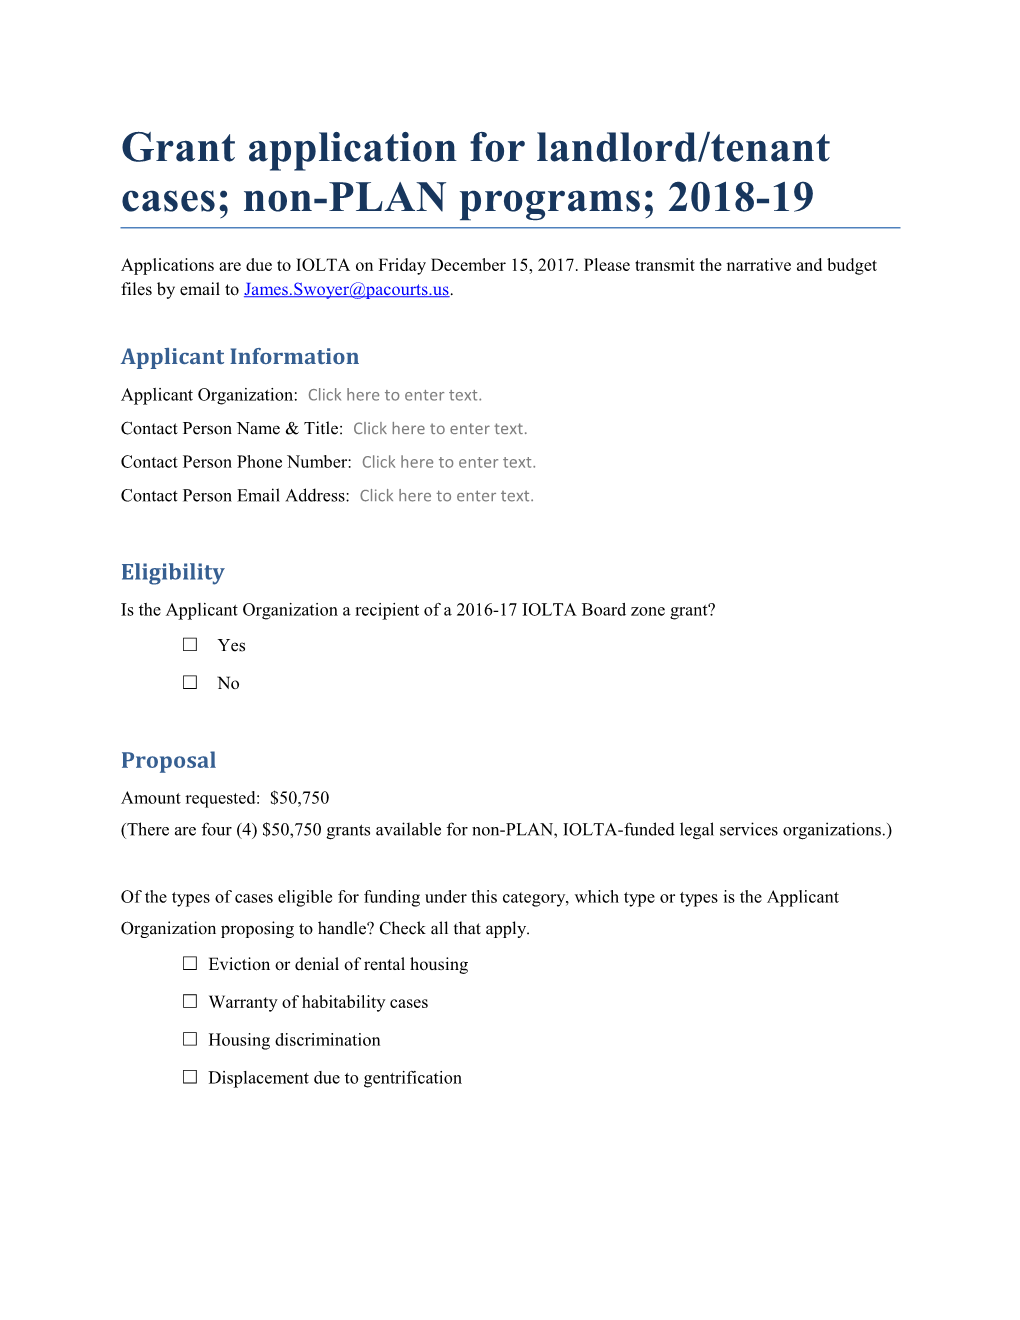 Grant Application for Landlord/Tenant Cases; Non-PLAN Programs; 2018-19